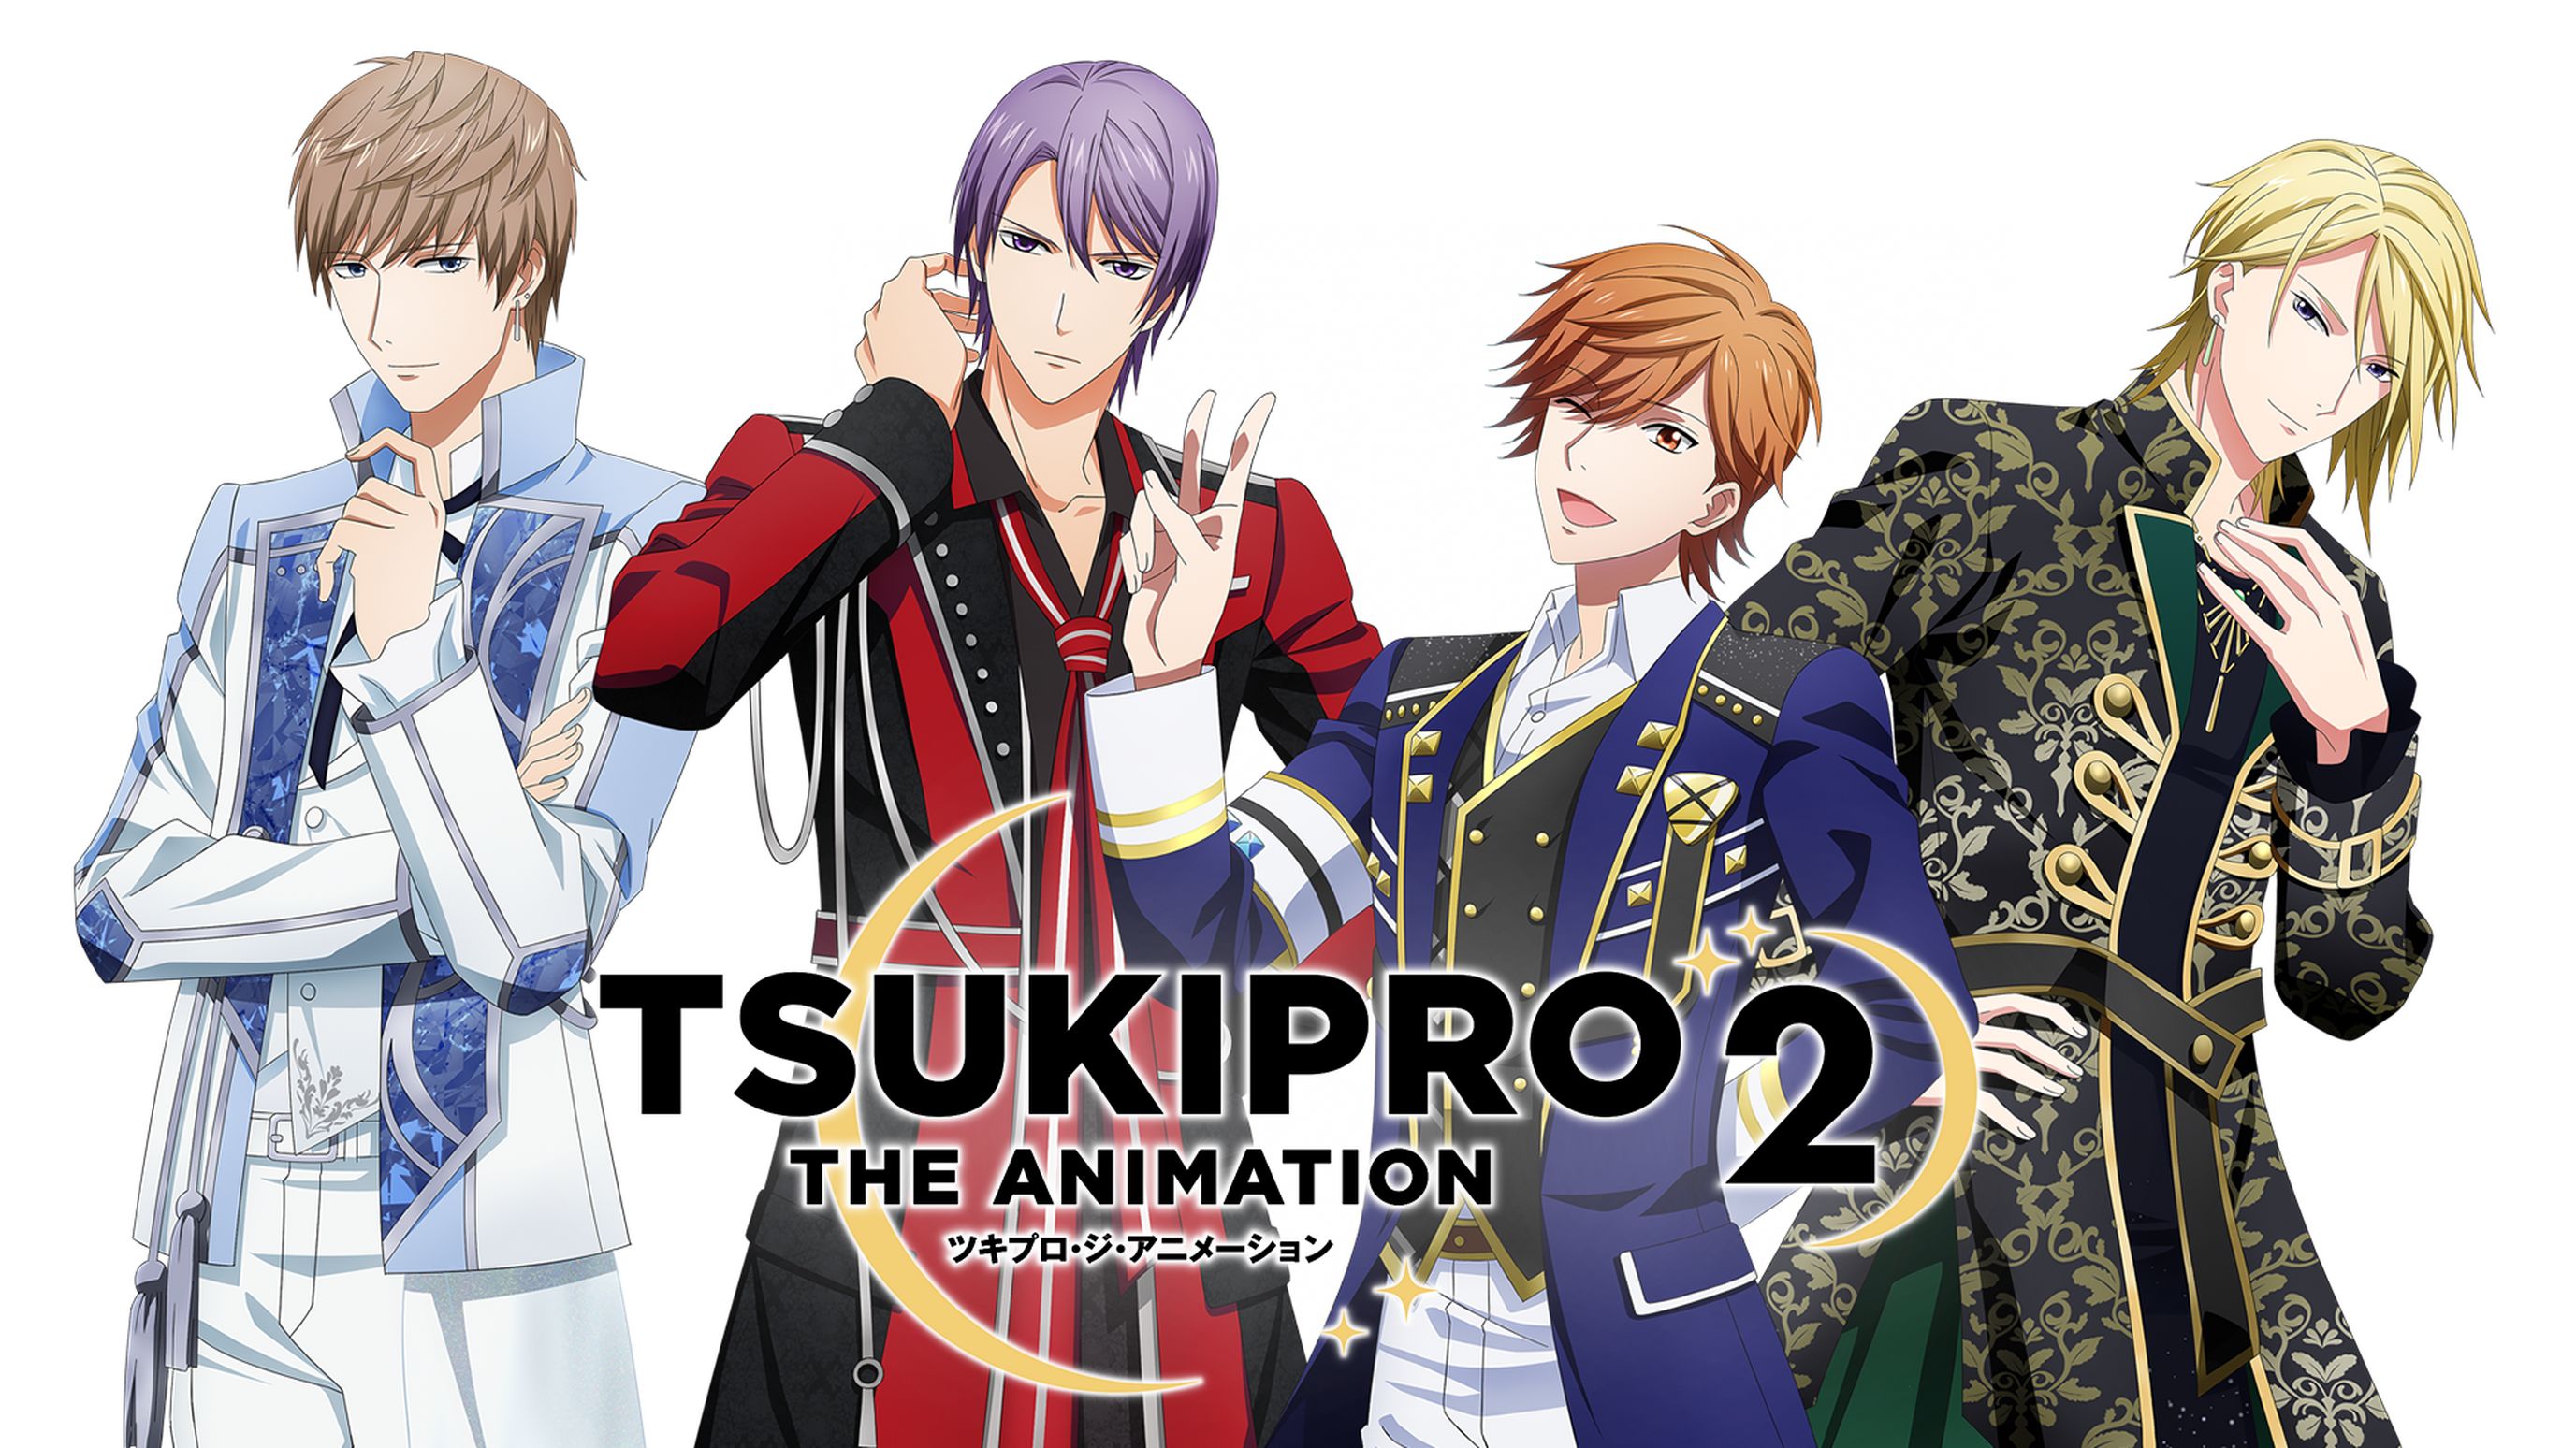 Tsukipro The Animation 2 アニメ 21 の動画視聴 U Next 31日間無料トライアル